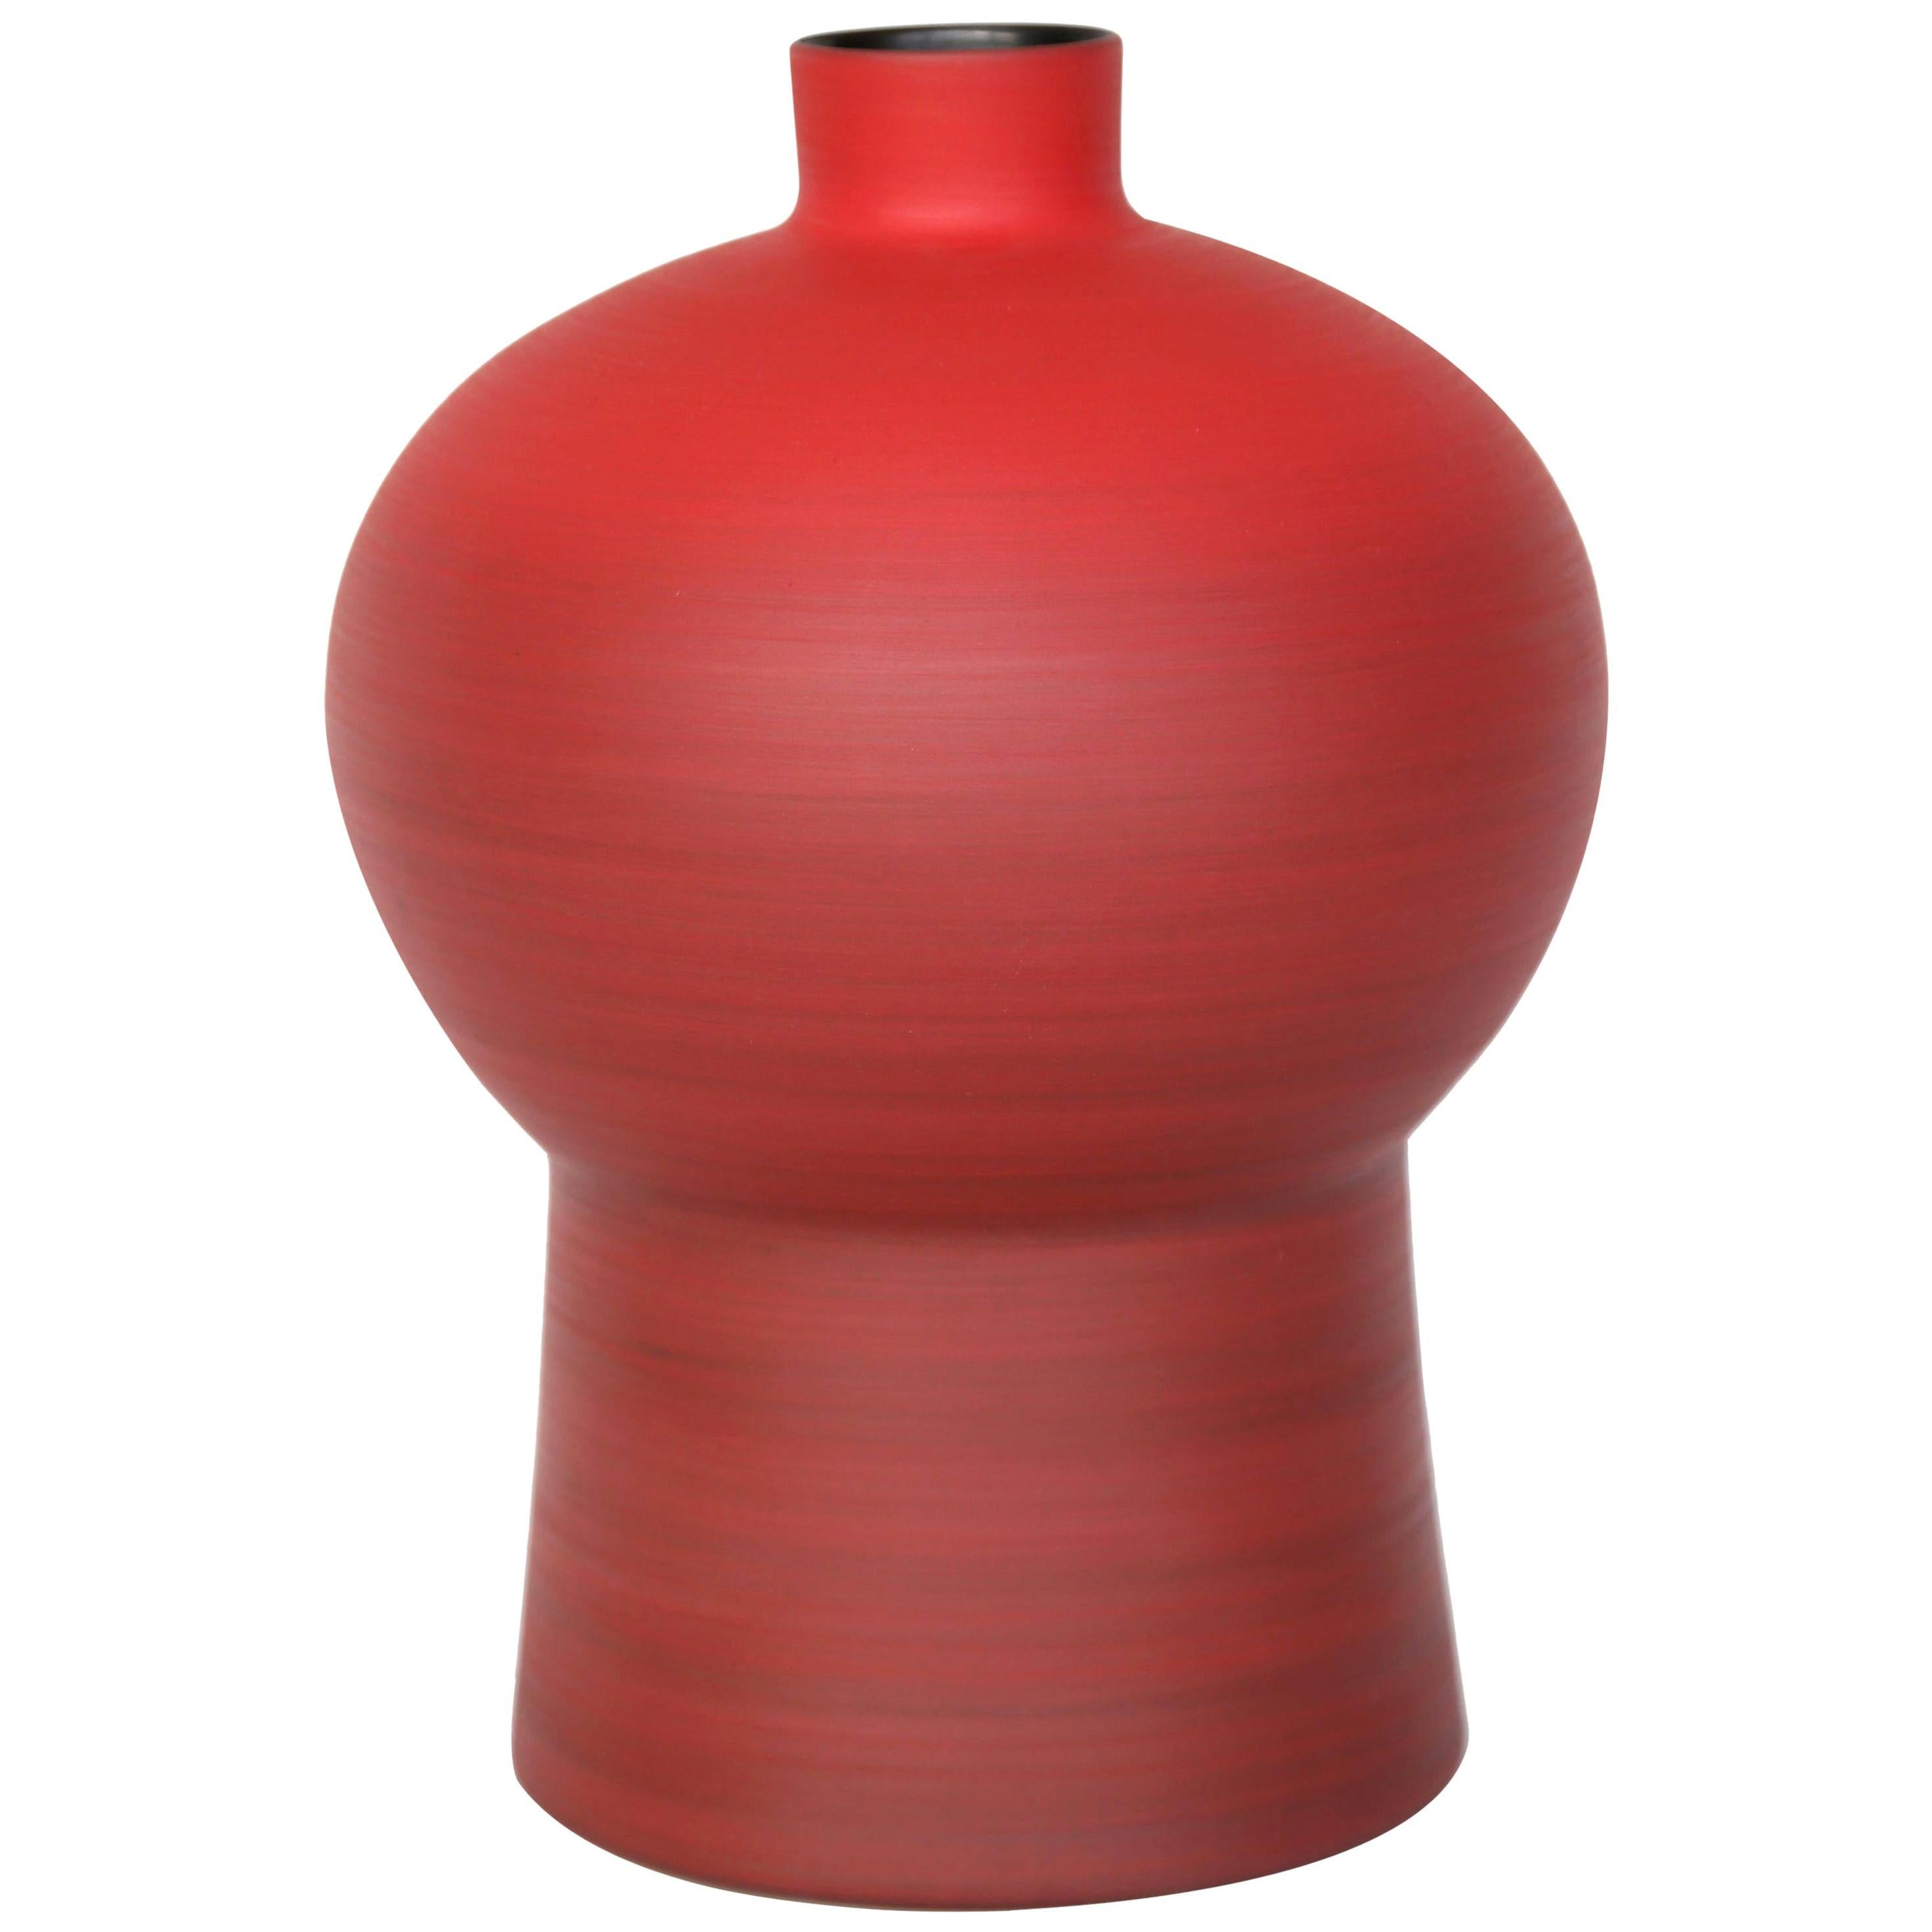 Rina Menardi Handmade Ceramic Royal Queen Red Vase For Sale